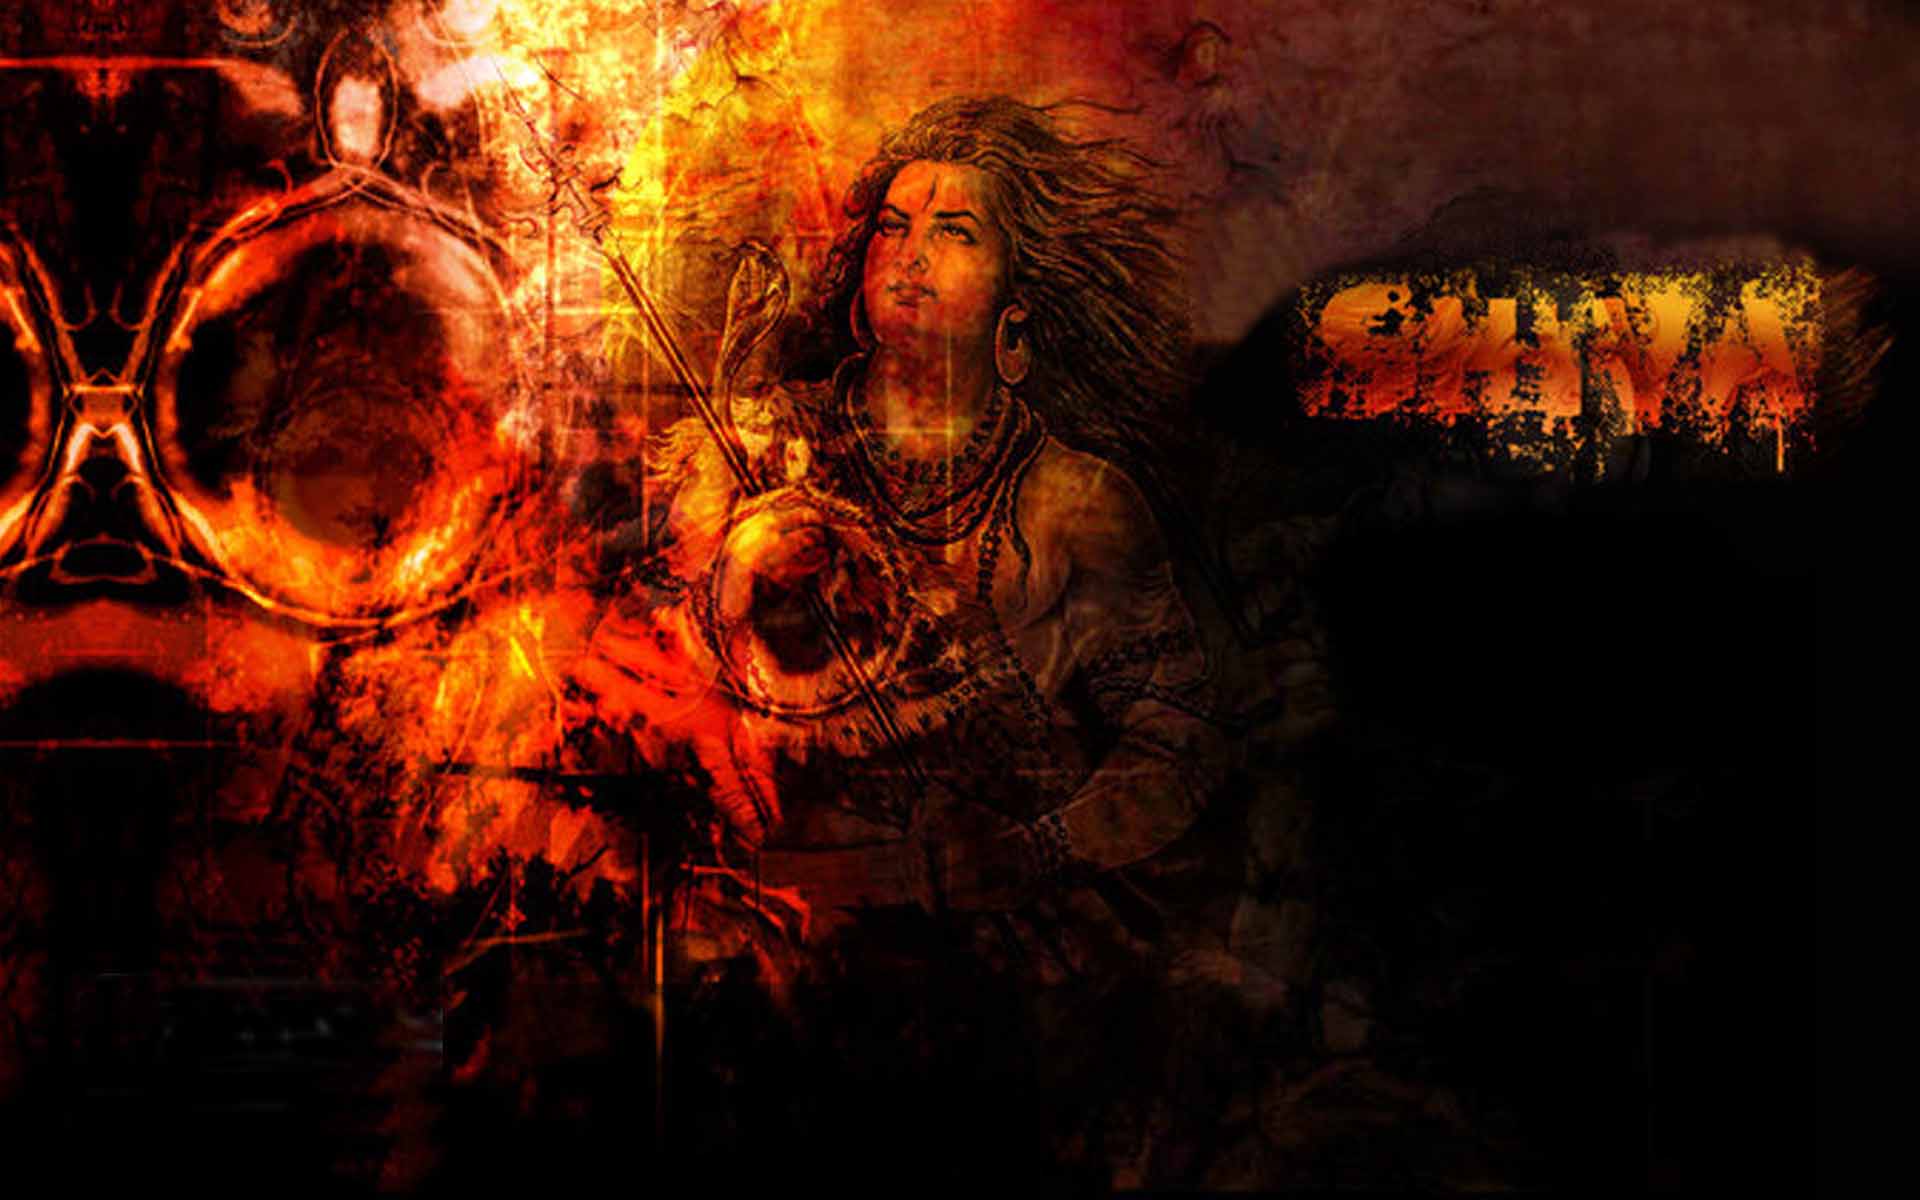 Shiva Animated Full Hd Image God Hd Wallpapers